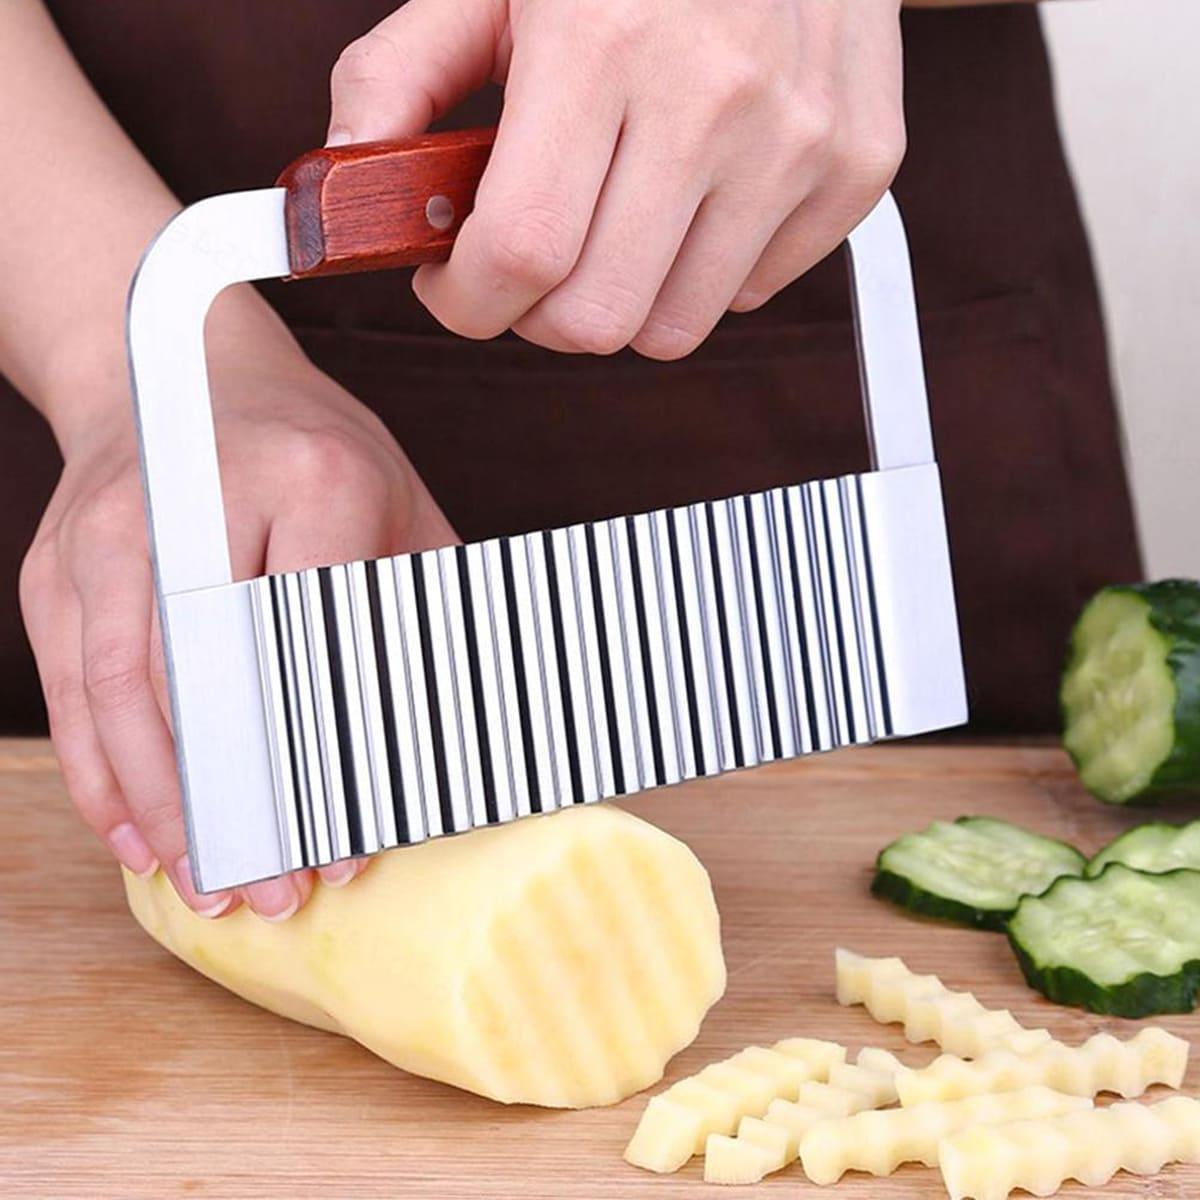 Нож для нарезки картофеля фри с деревянной рукояткой, фото 1